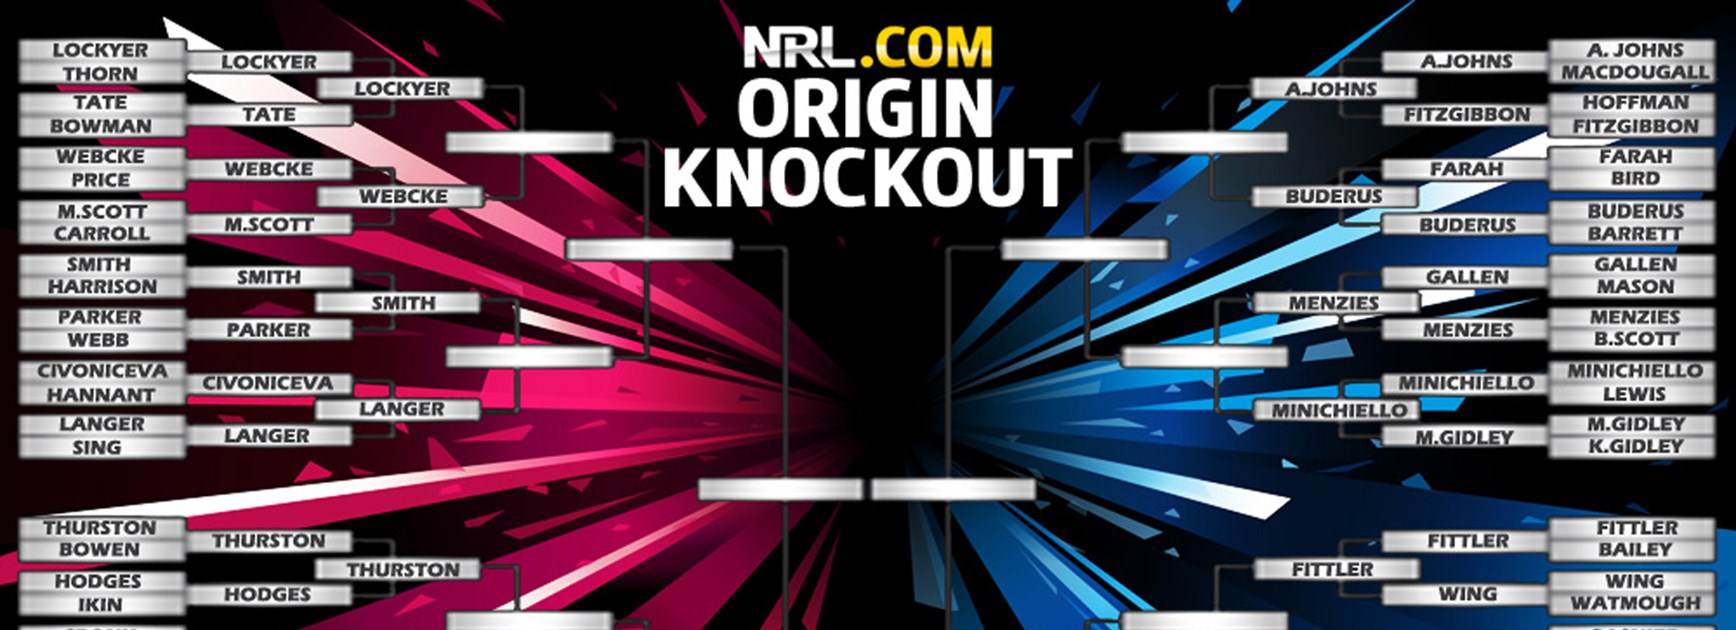 NRL.com's Origin Knockout playoff bracket heading into Round 3.